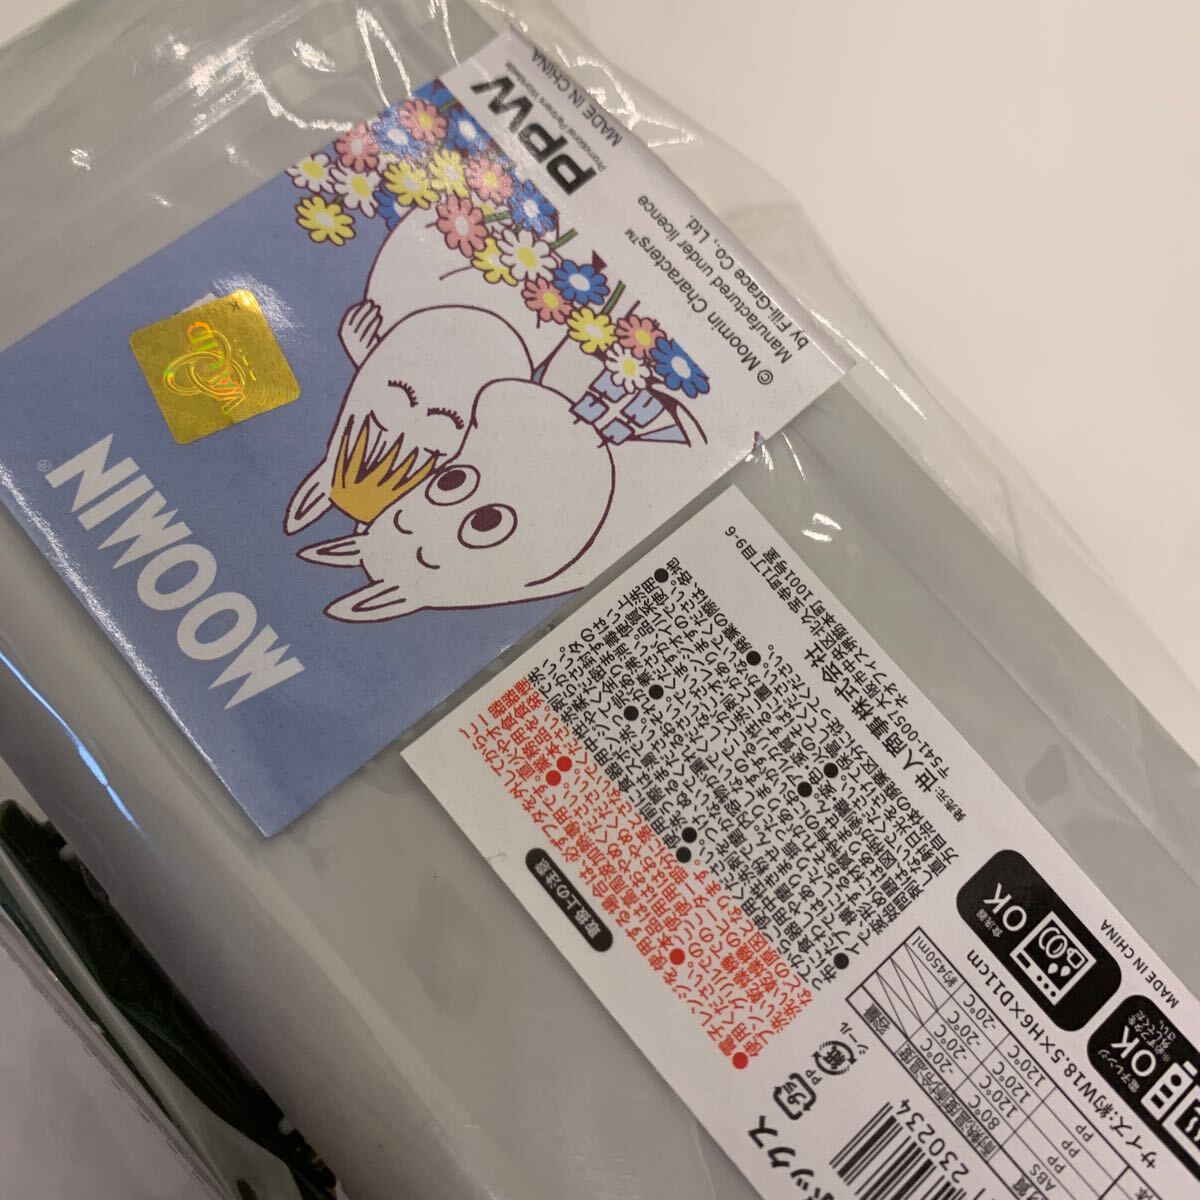  Moomin ланч box коробка для завтрака бесплатная доставка ②